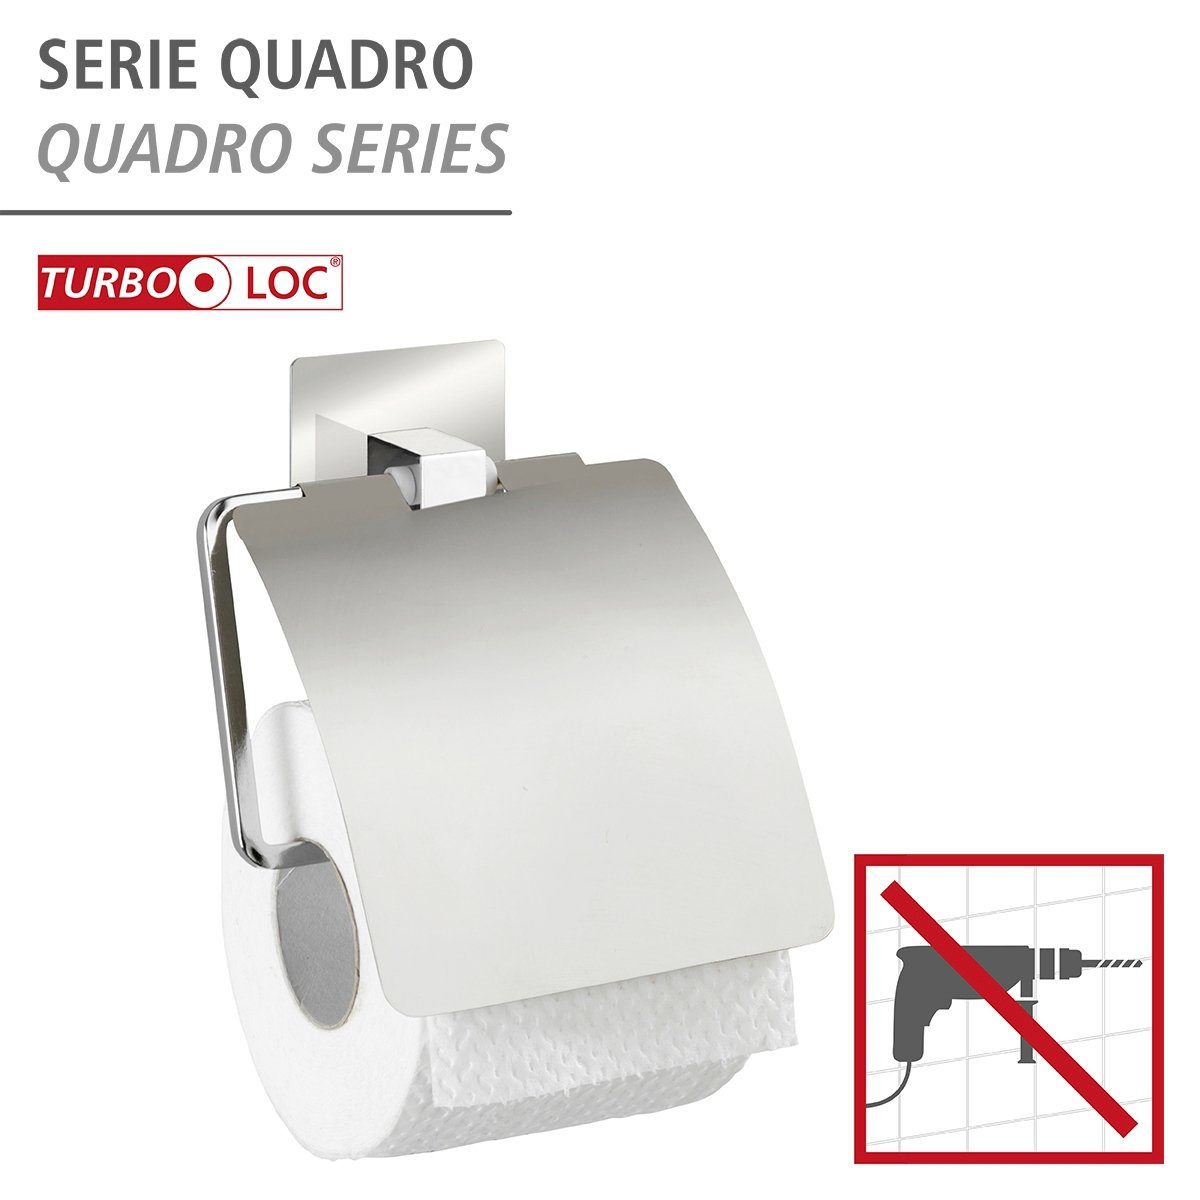 Quadro WENKO (1-St) Turbo-Loc Toilettenpapierhalter